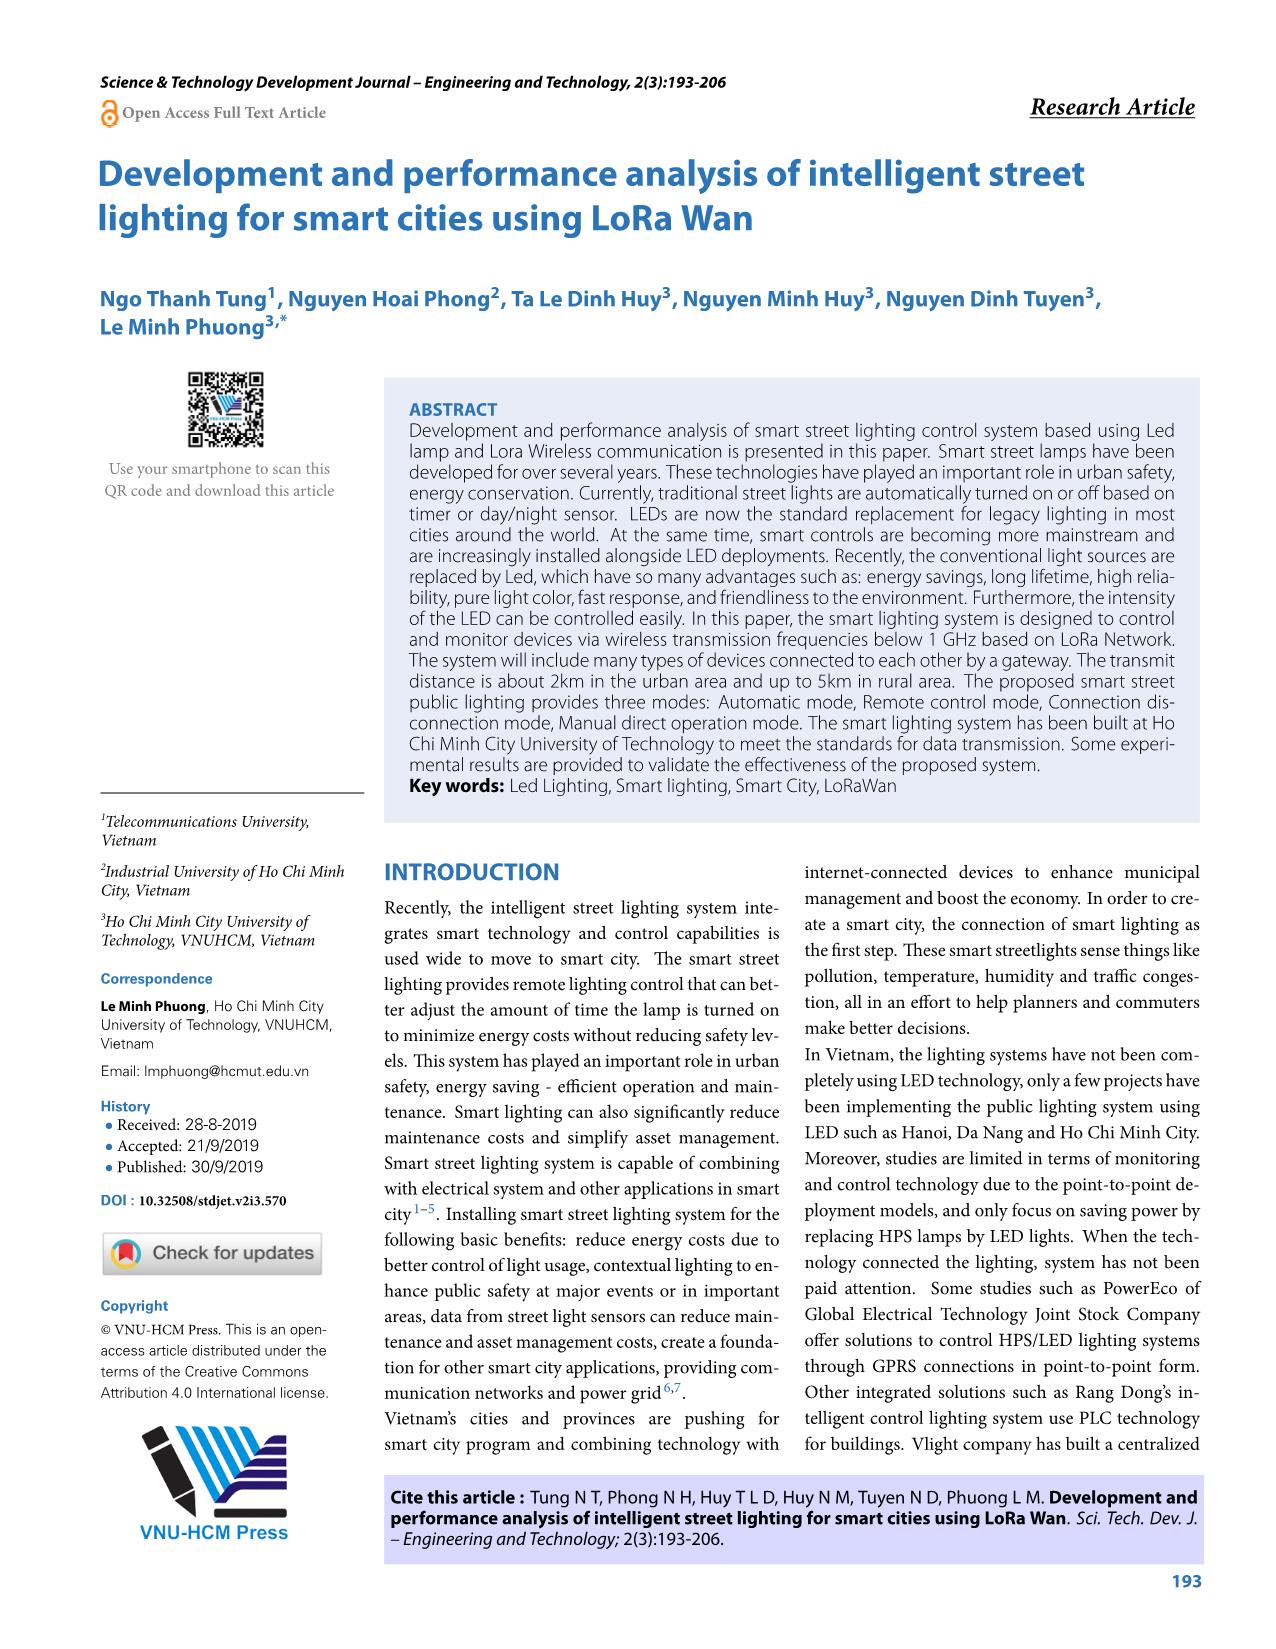 Development and performance analysis of intelligent street lighting for smart cities using LoRa Wan trang 1